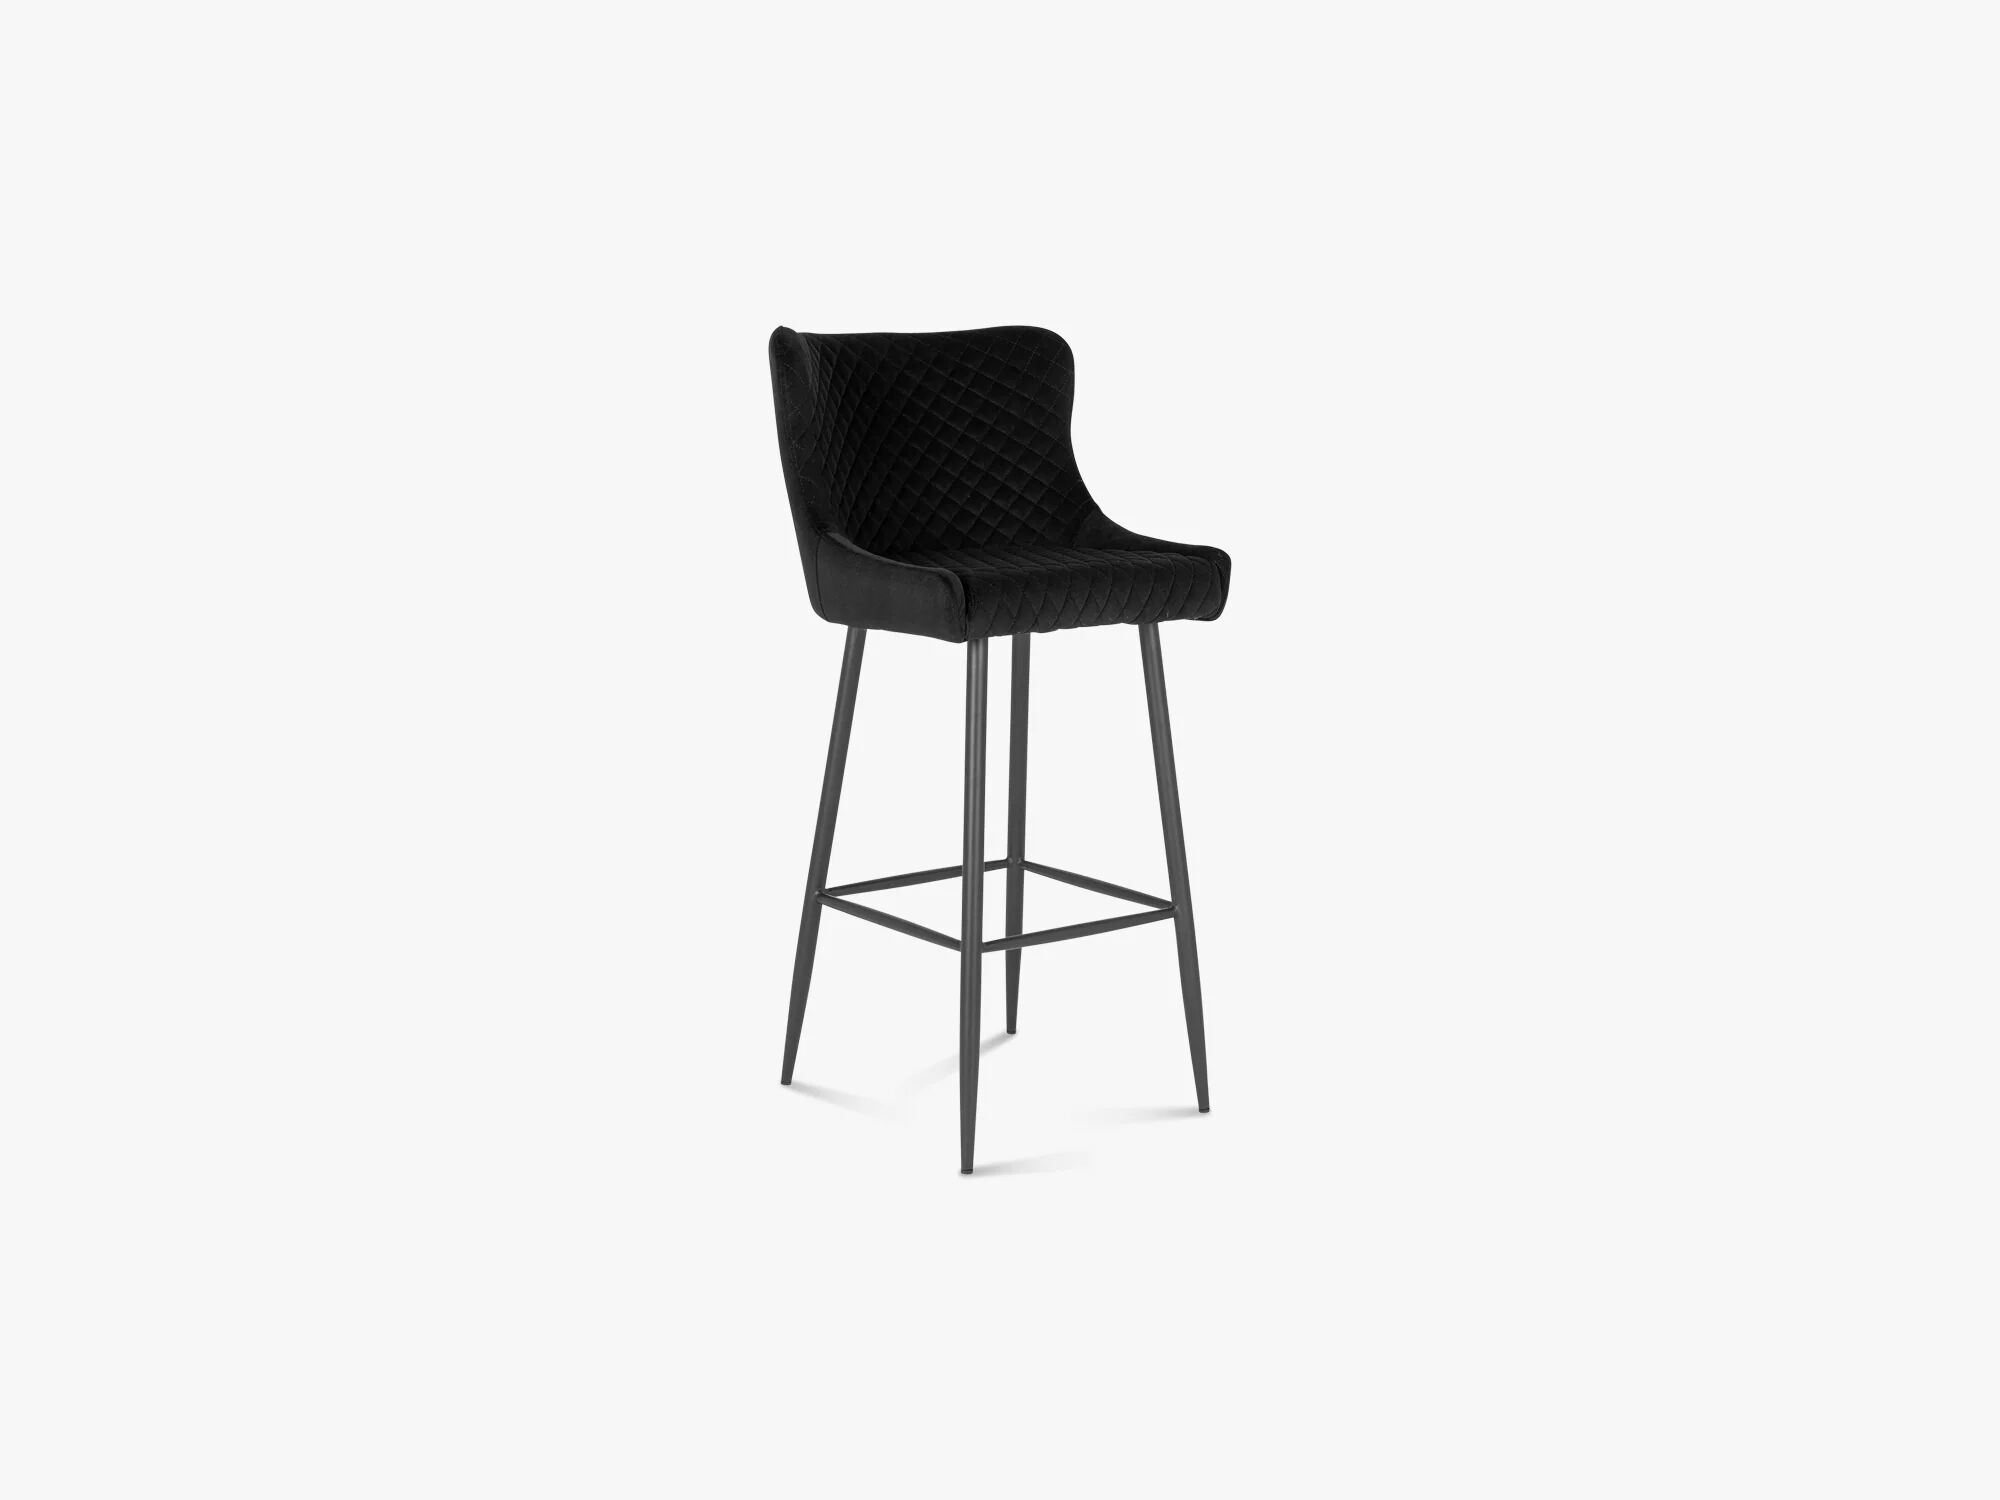 Nordic Essentials Dallas barstol, barstol i svart velour med svarte ben